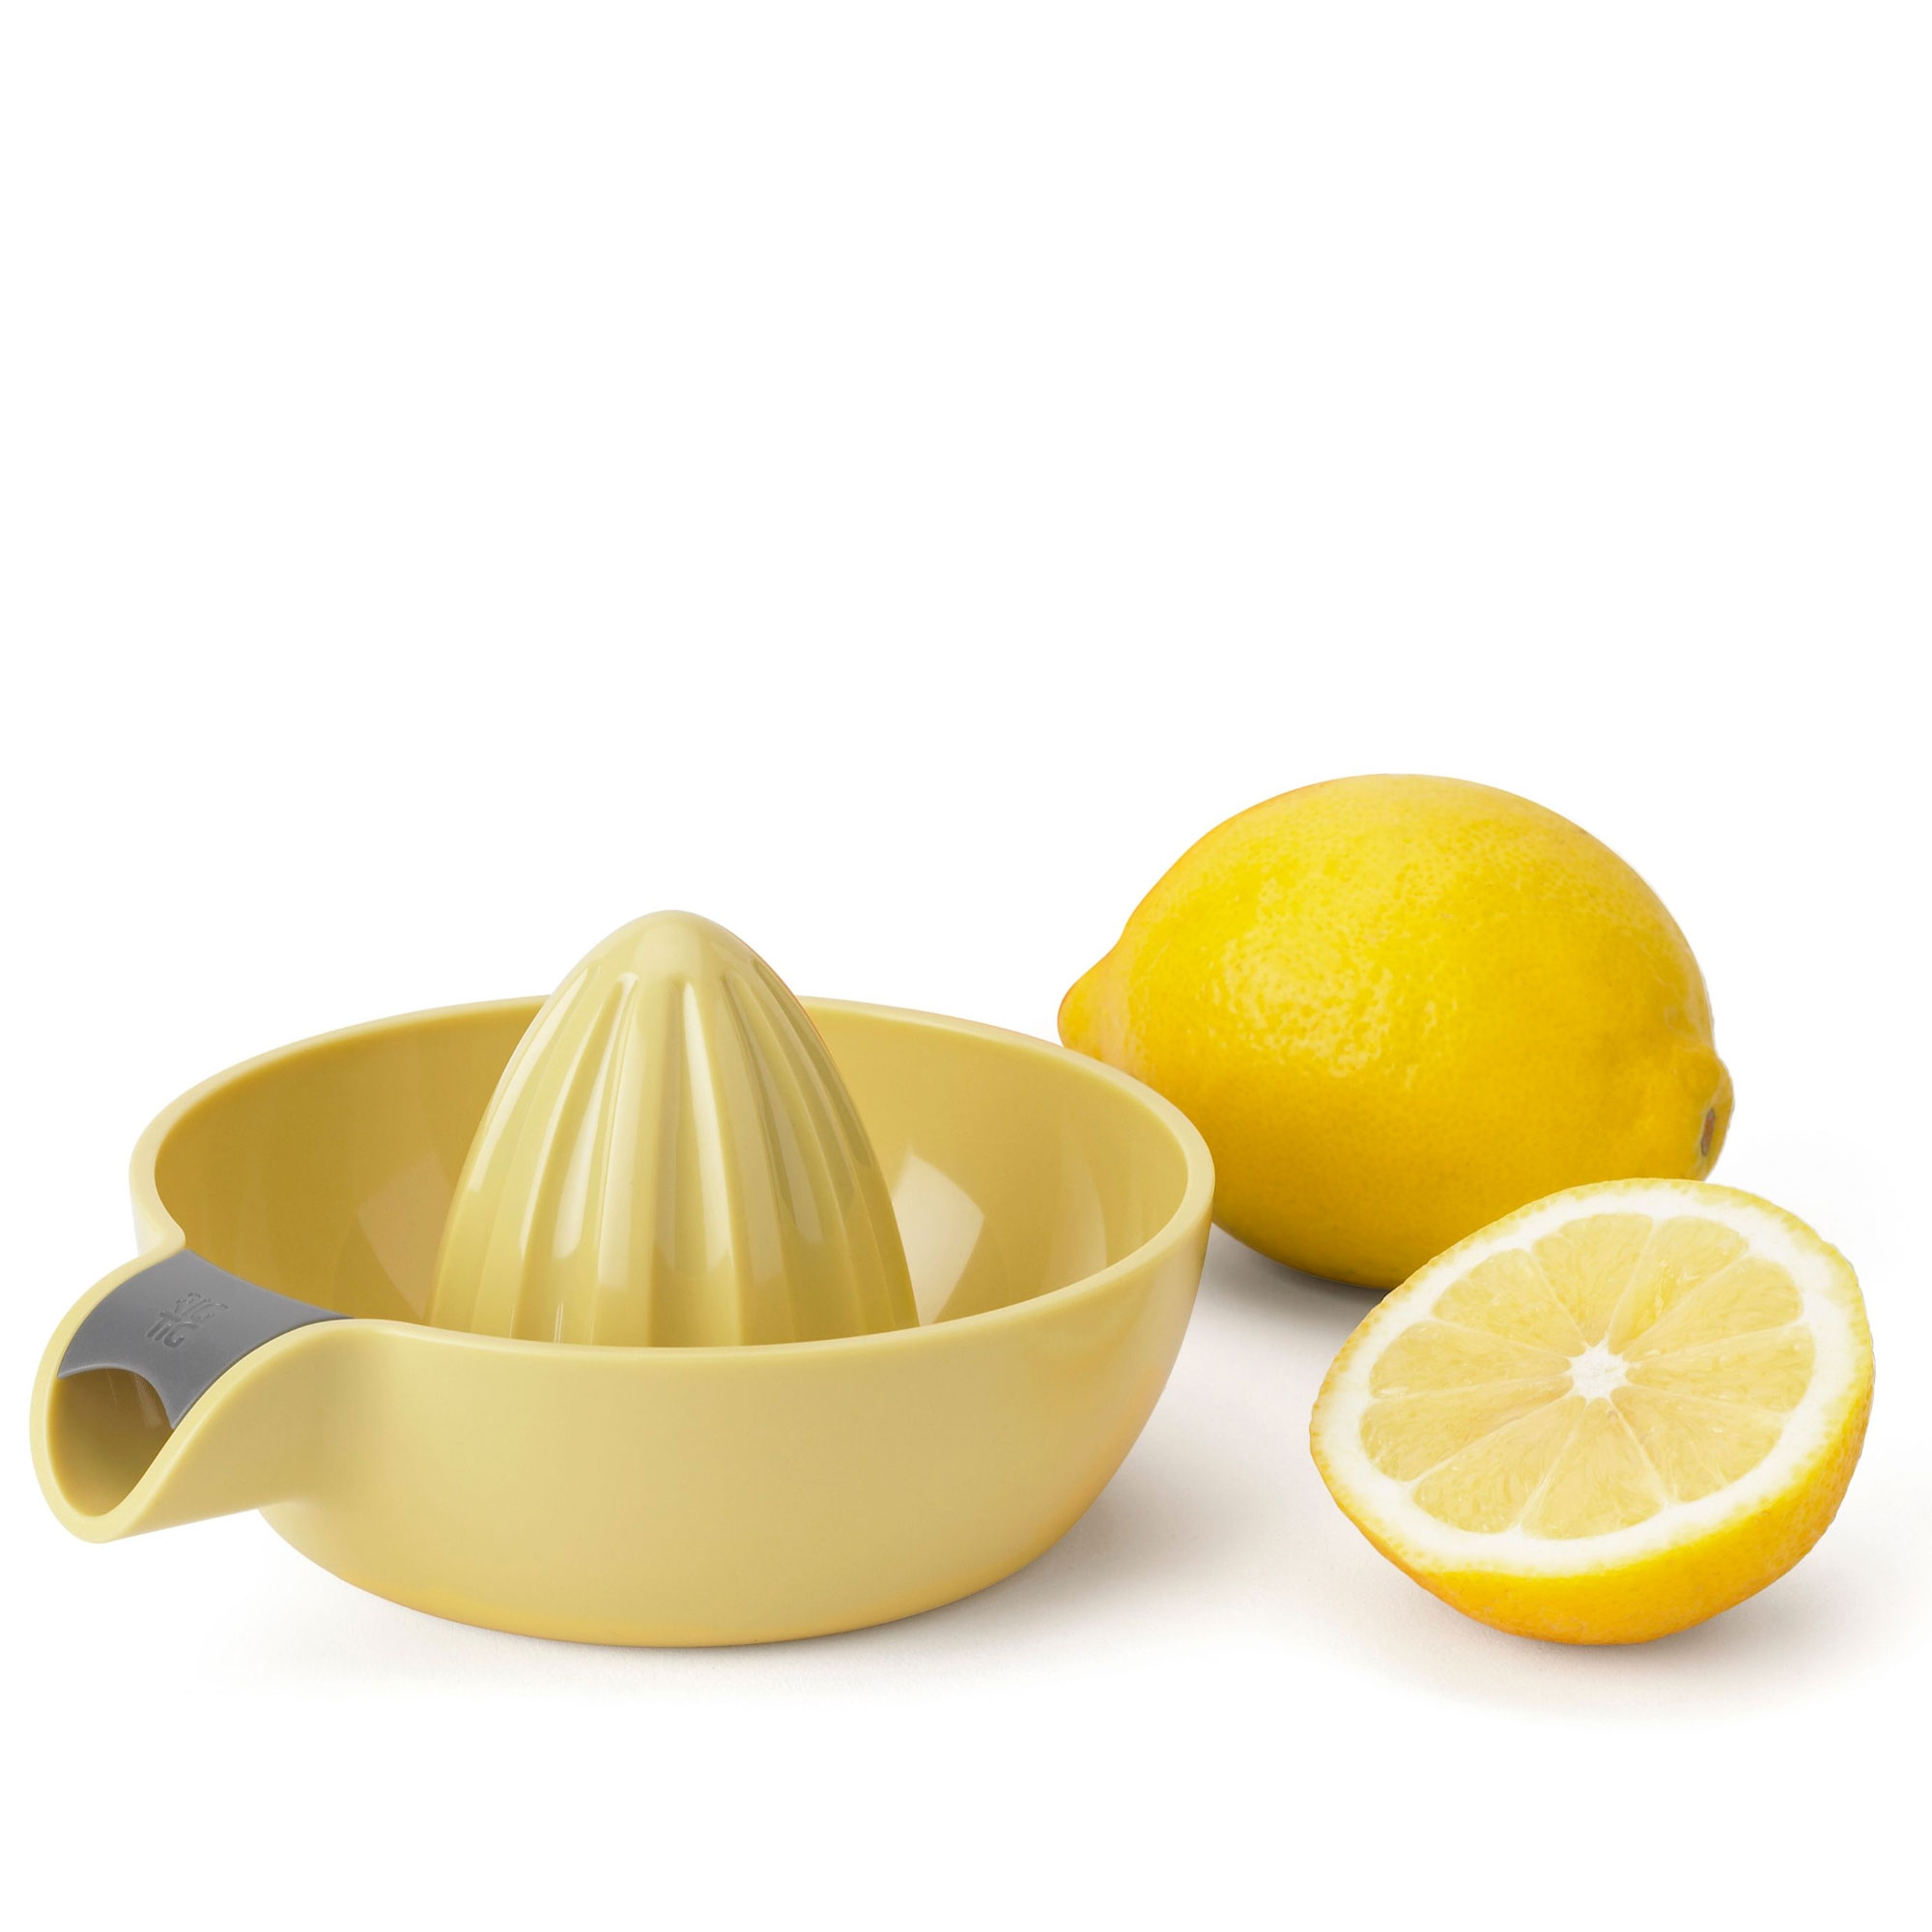 Stelton - RIG TIG - JUICY citrus juicer - Yellow